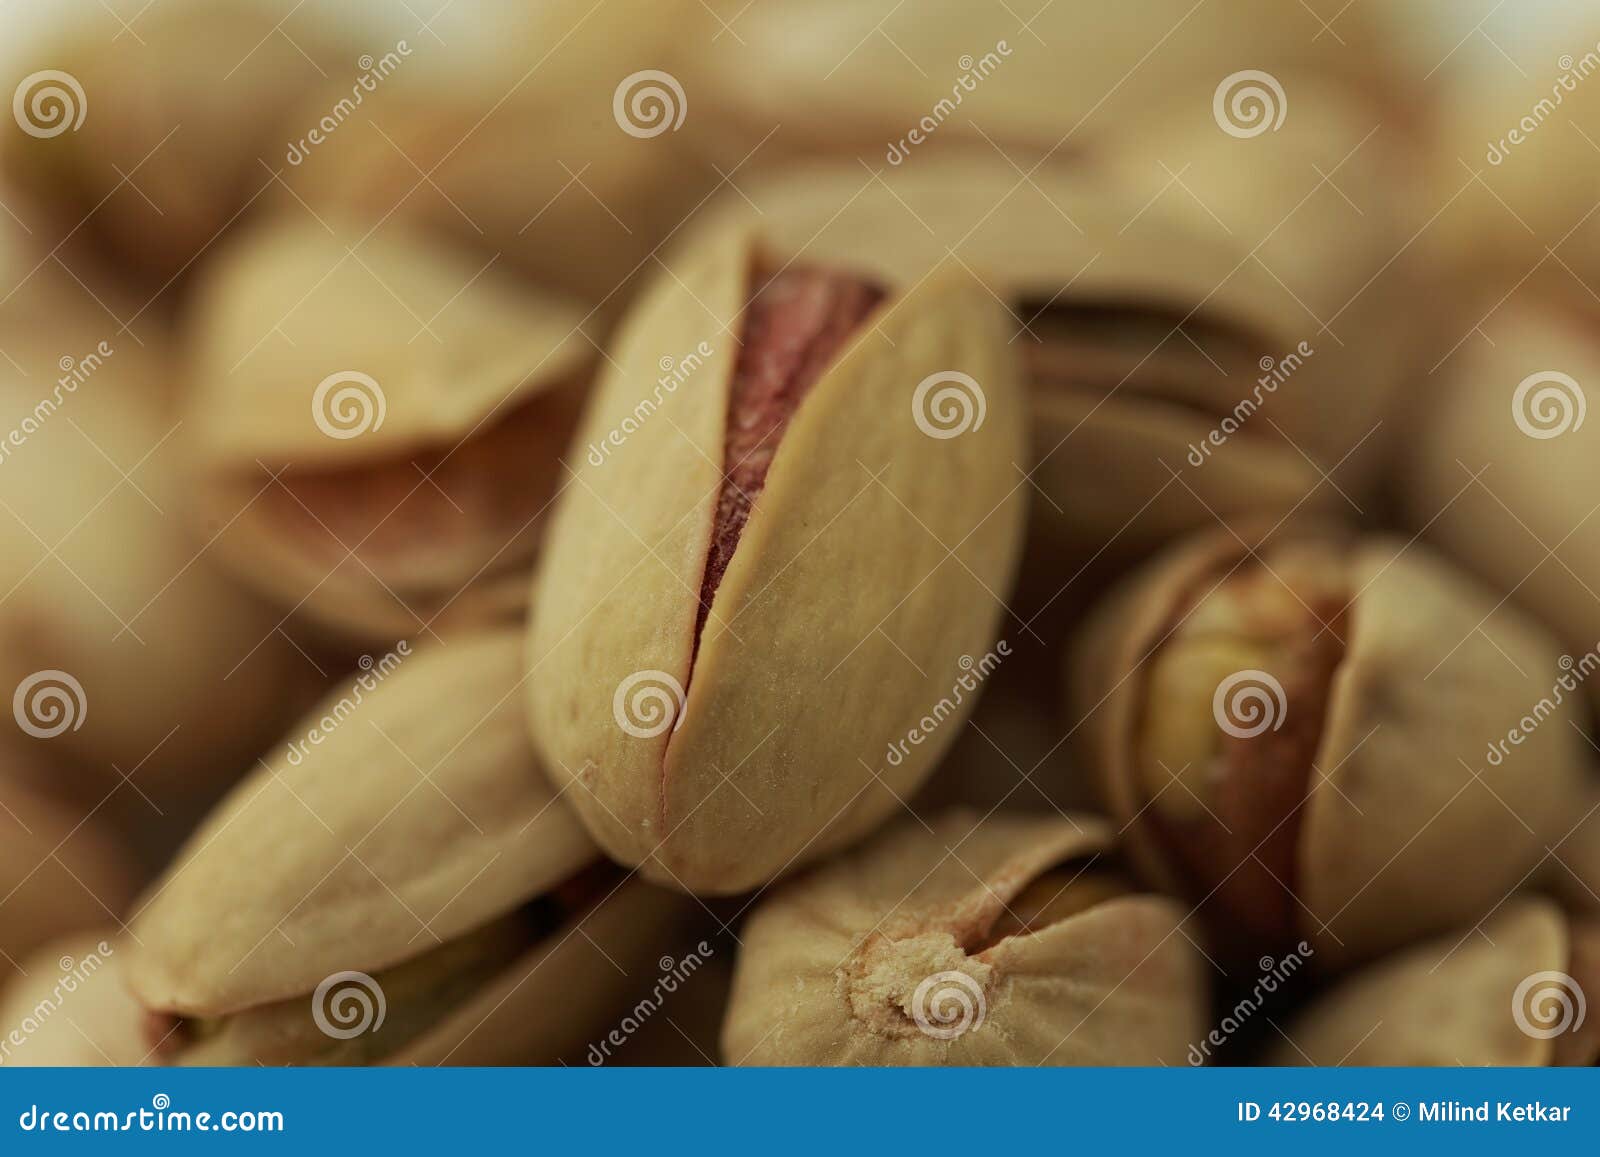 dry fruits , pista pistachio nuts spread.